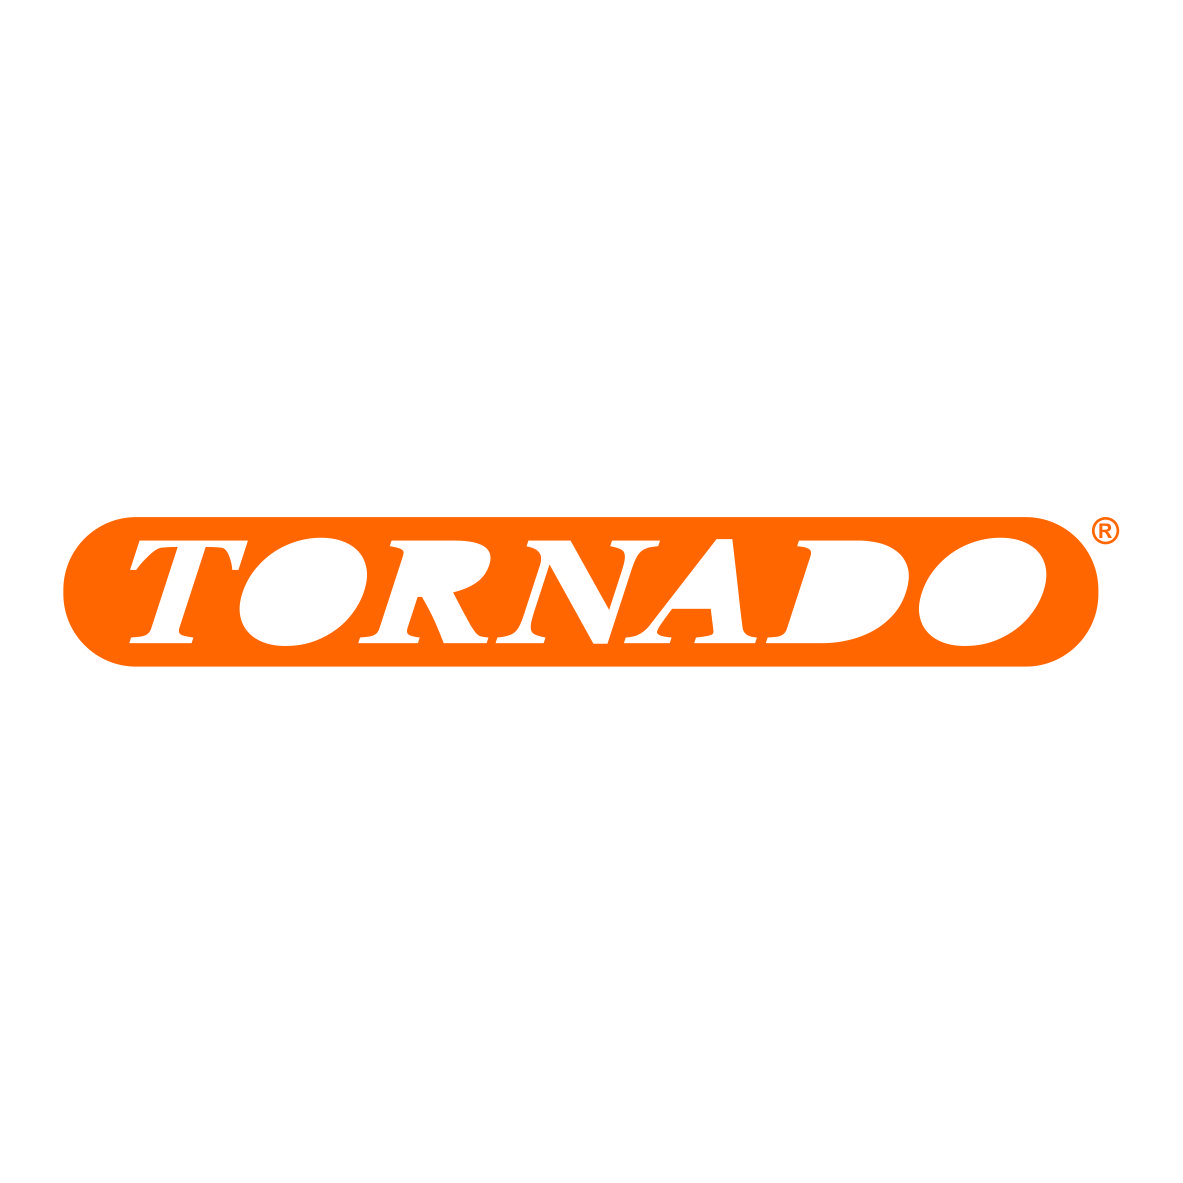 TORNADO (YANG JIANG) HIGH SPEED CRAFT TECHNOLOGY DEVELOPMENT COMPANY LTD.